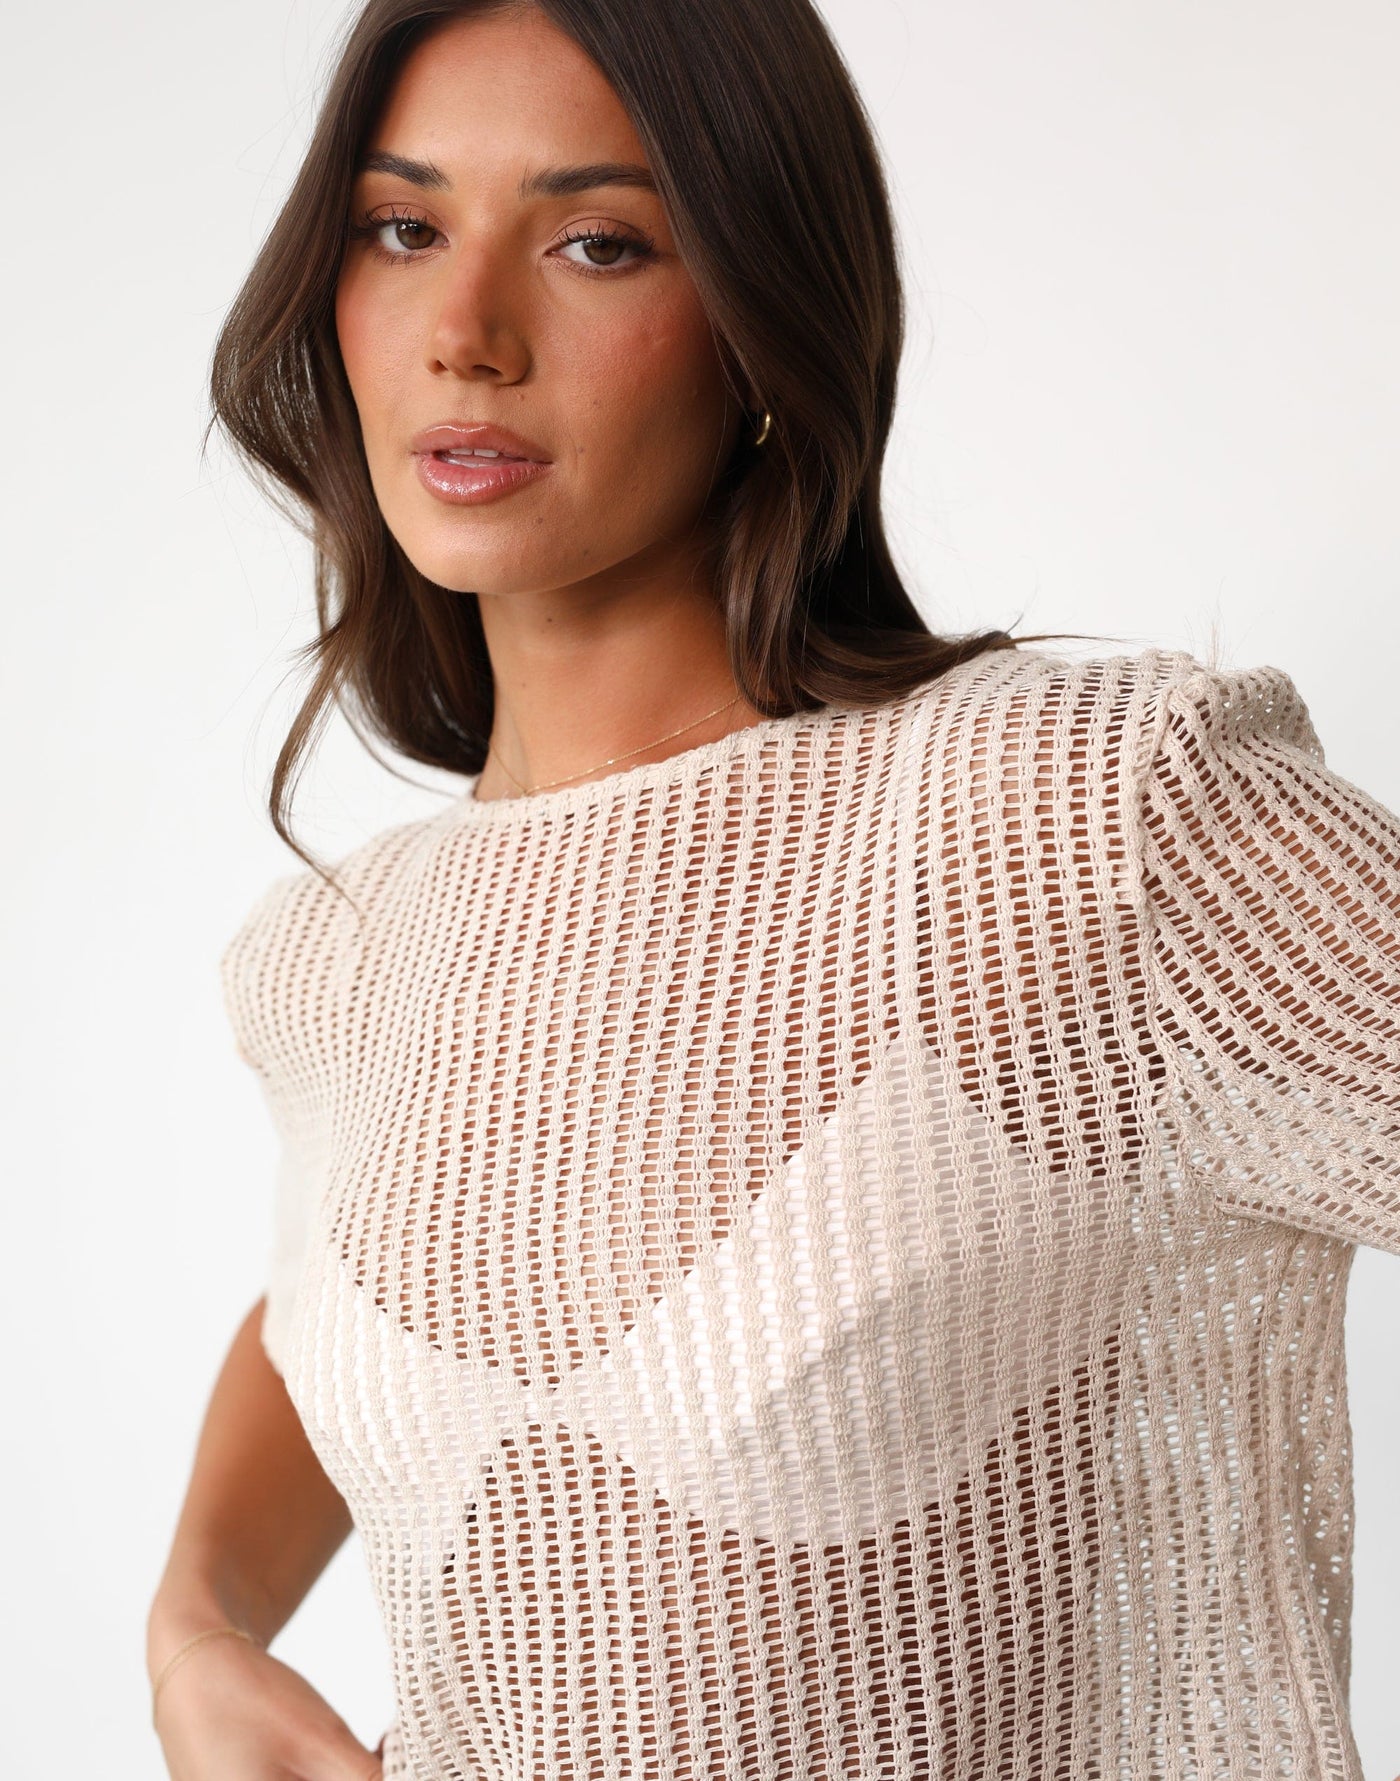 Kalli Shirt (Sand) - Sheer Crochet/Knit Oversized Shirt - Women's Top - Charcoal Clothing